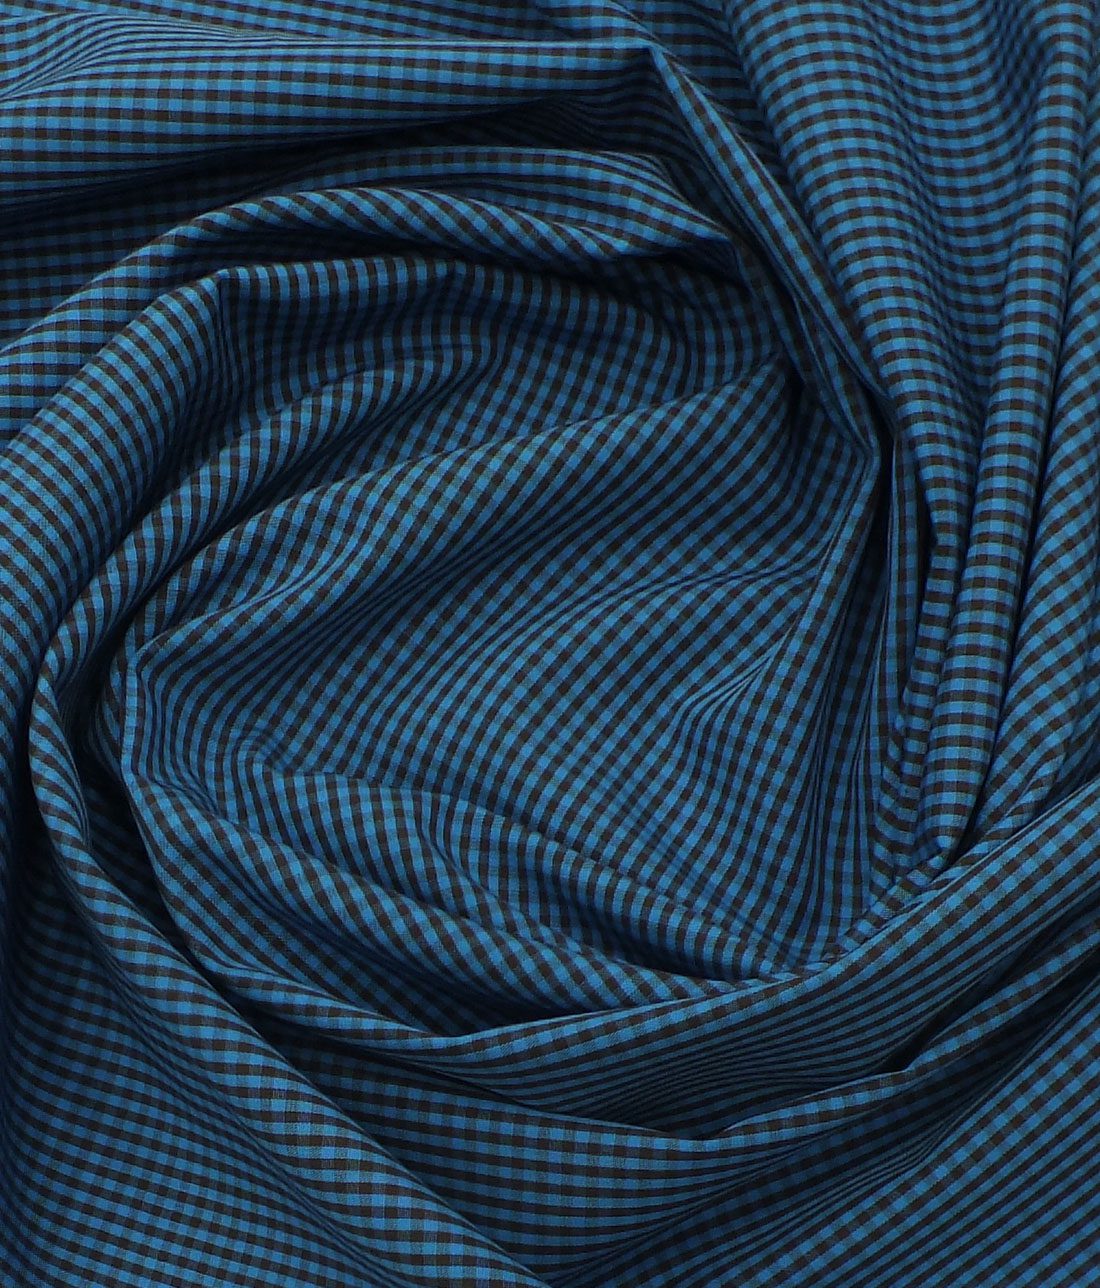 Giza House by Soktas Firozi Blue 100% Premium Cotton Blue Checks Shirt Fabric (1.60 M)